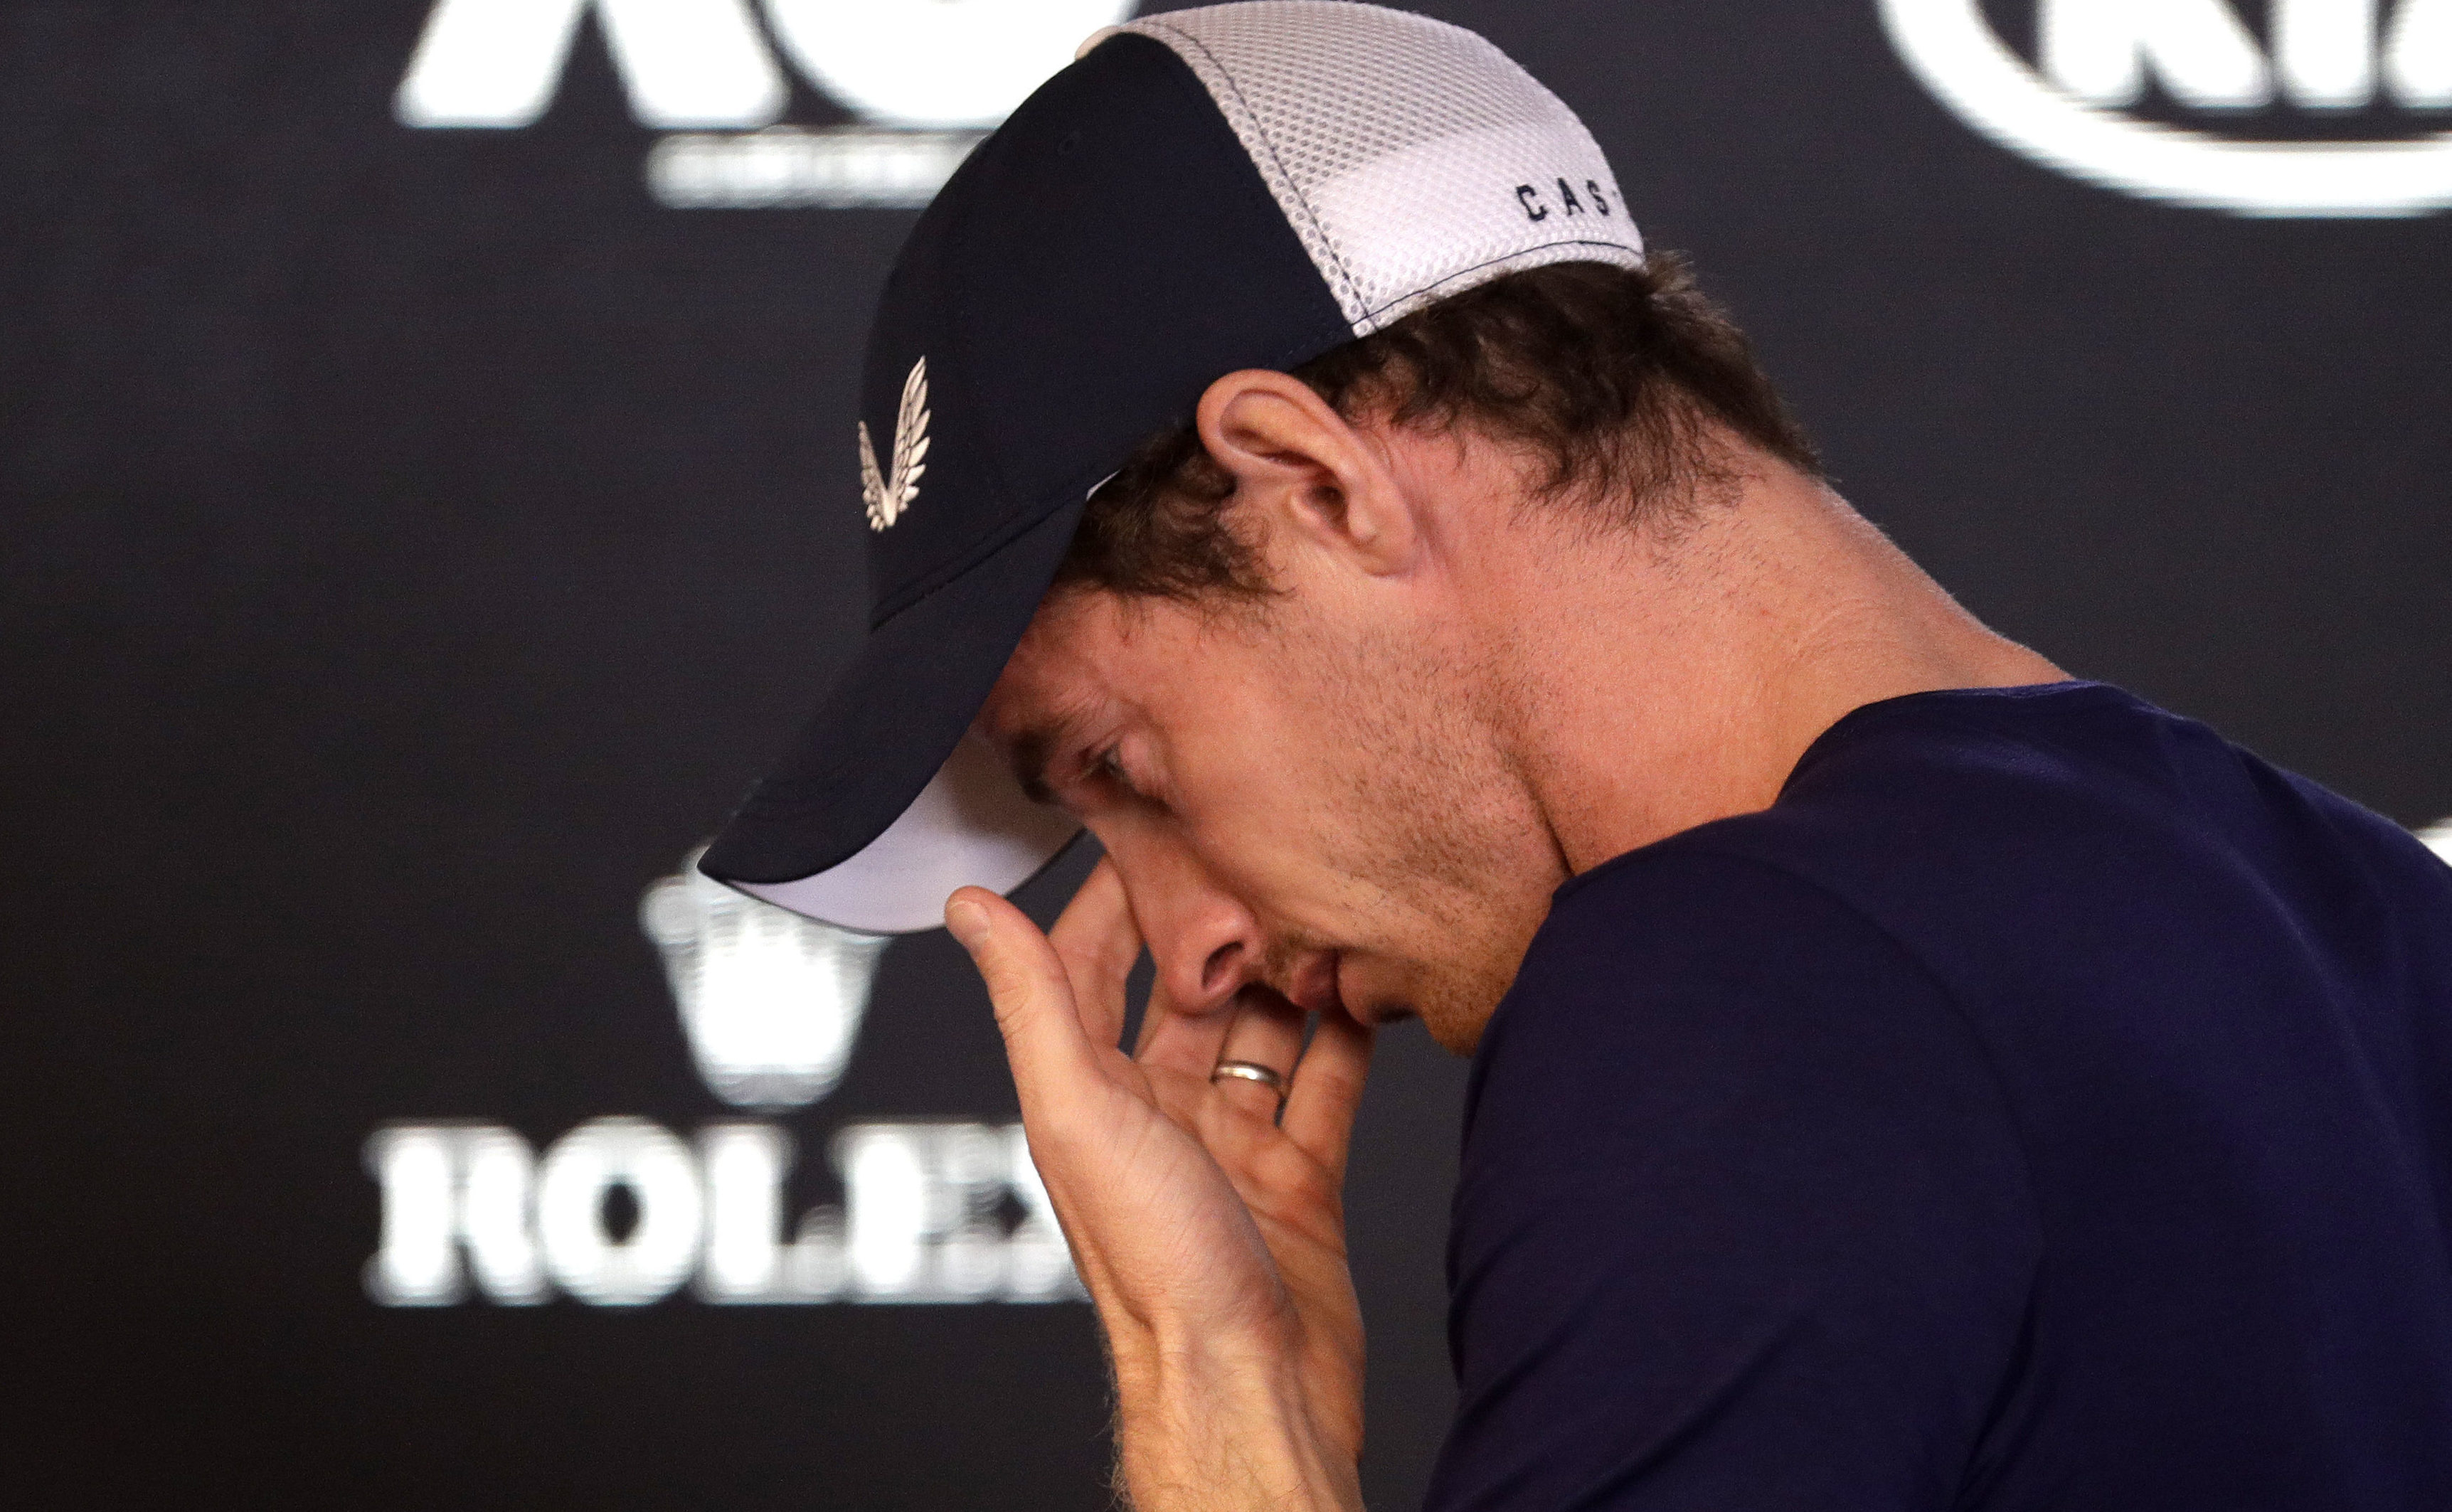 Andy Murray was visibly upset at the press conference (AP Photo/Mark Baker)